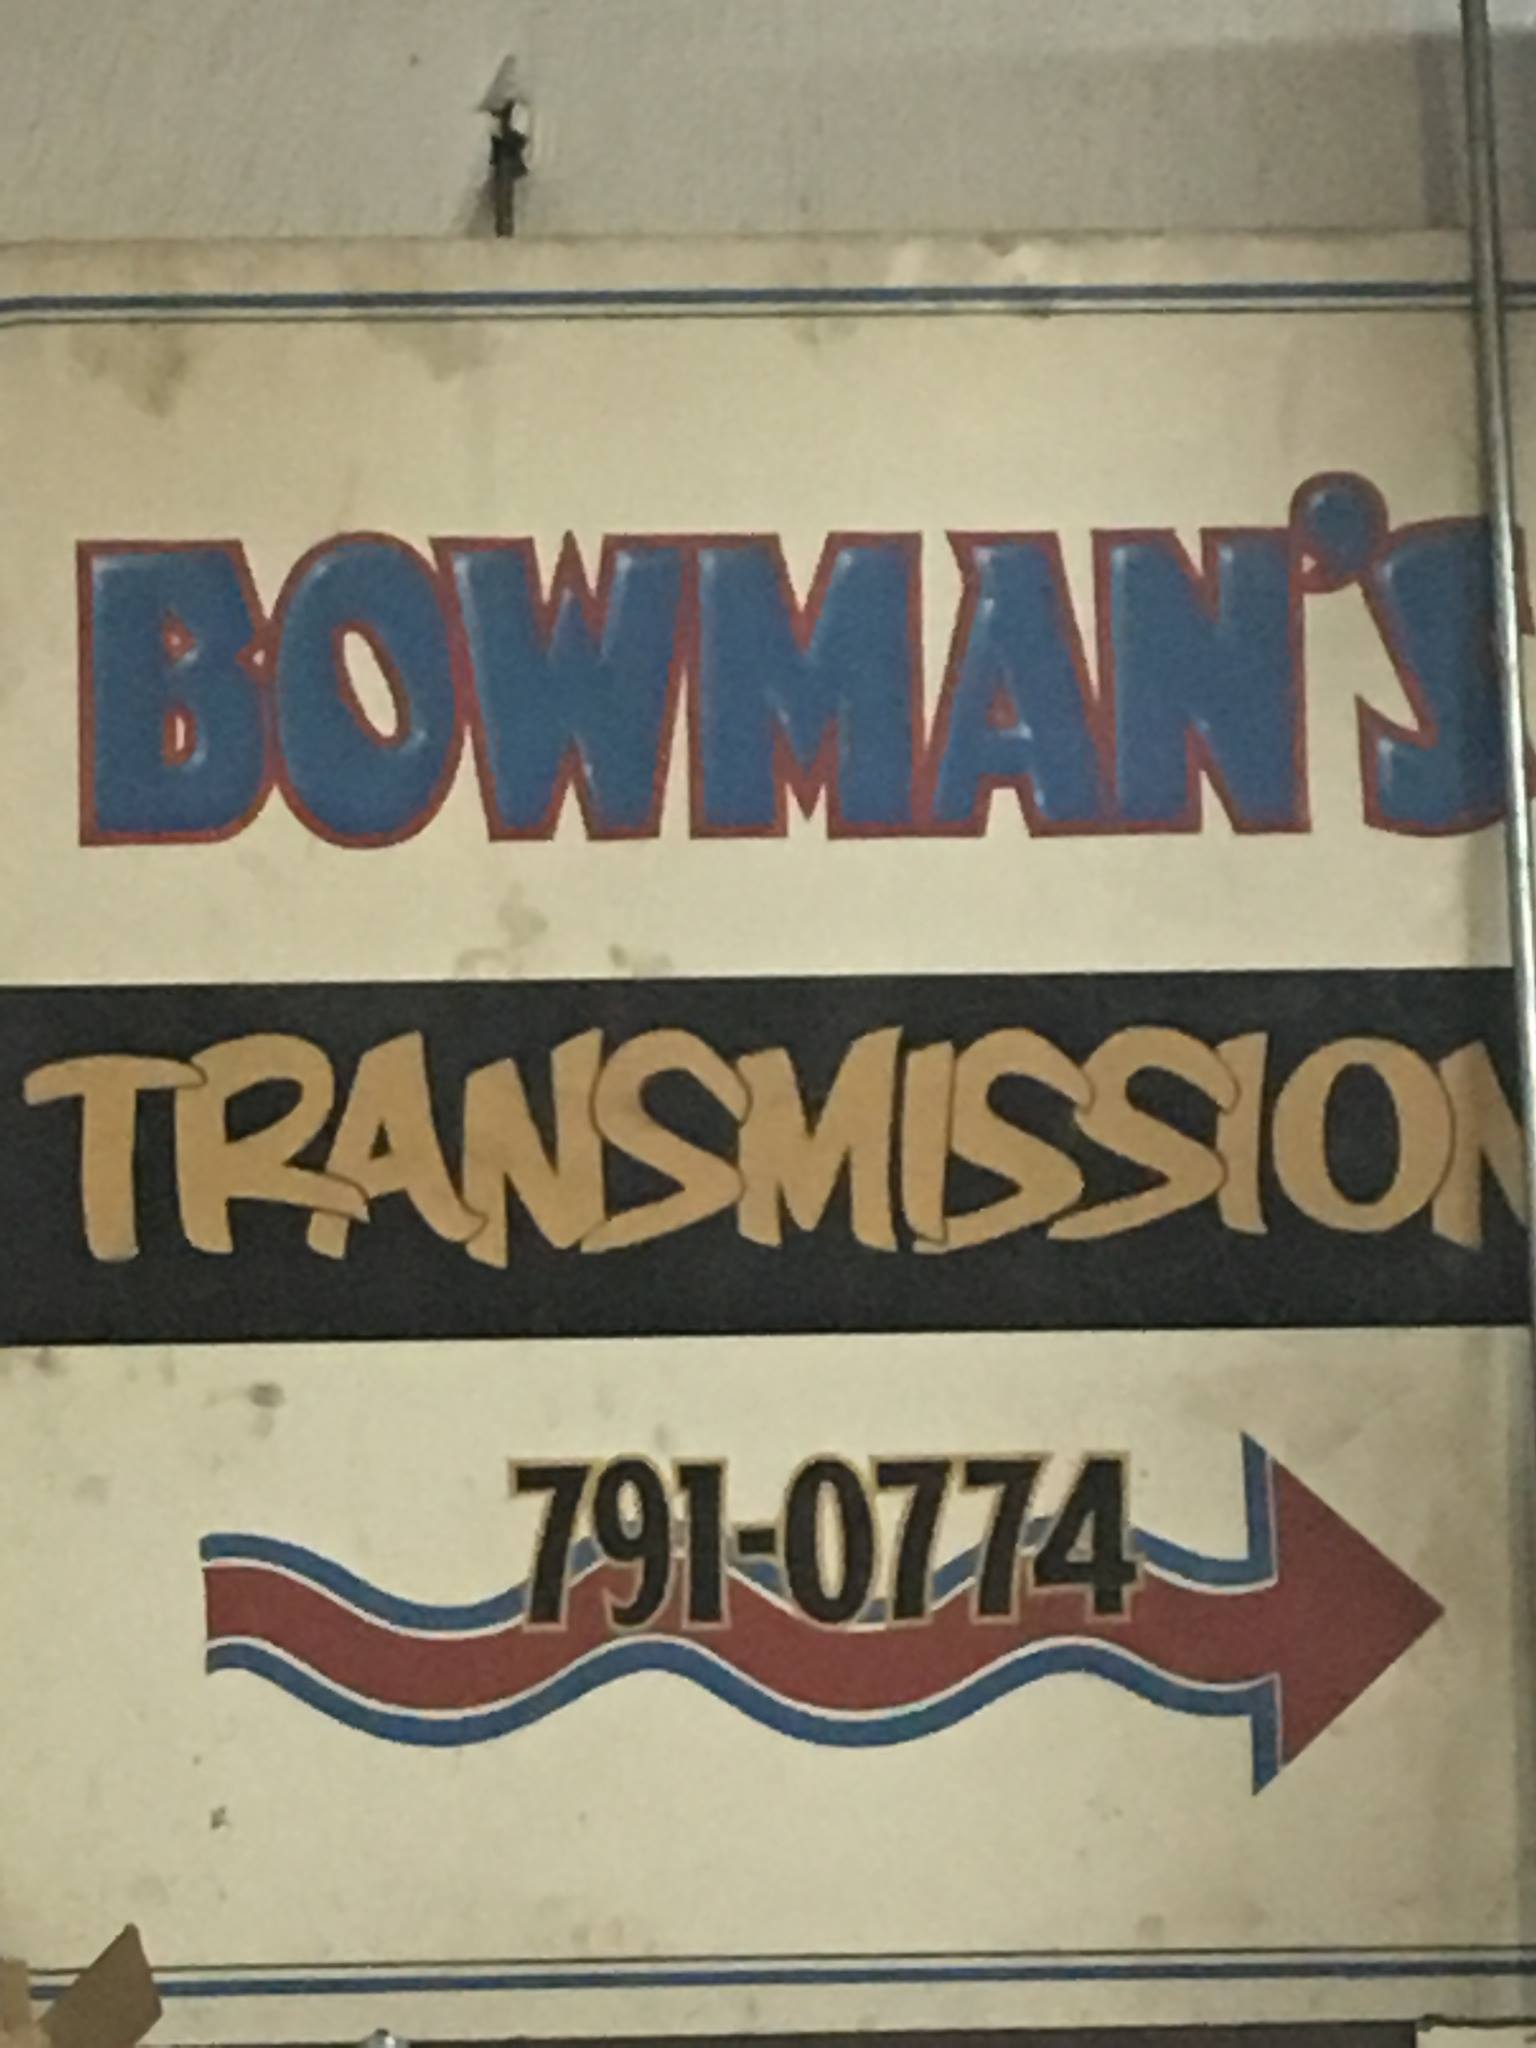 Bowman Transmission